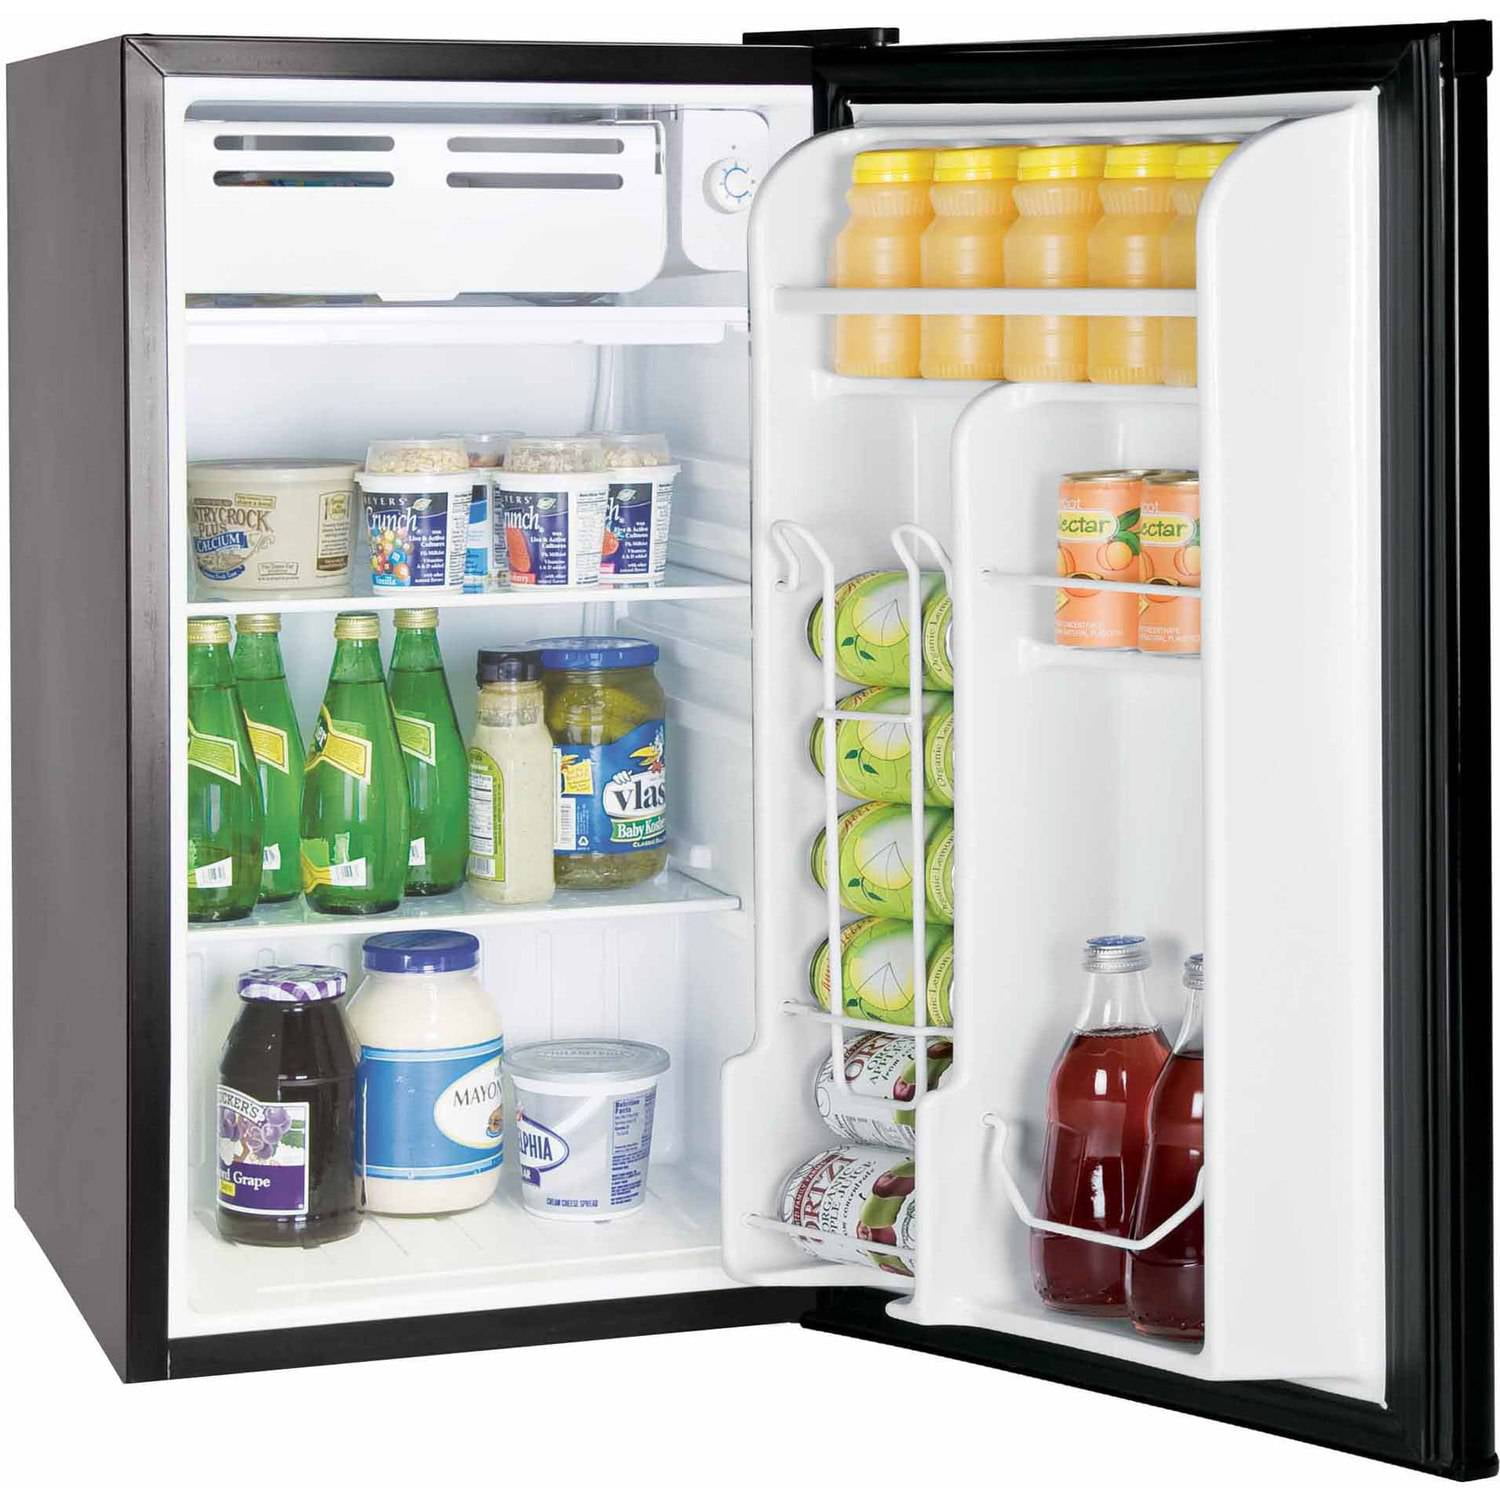 Igloo 3.2 cu ft Refrigerator, Black - Walmart.com